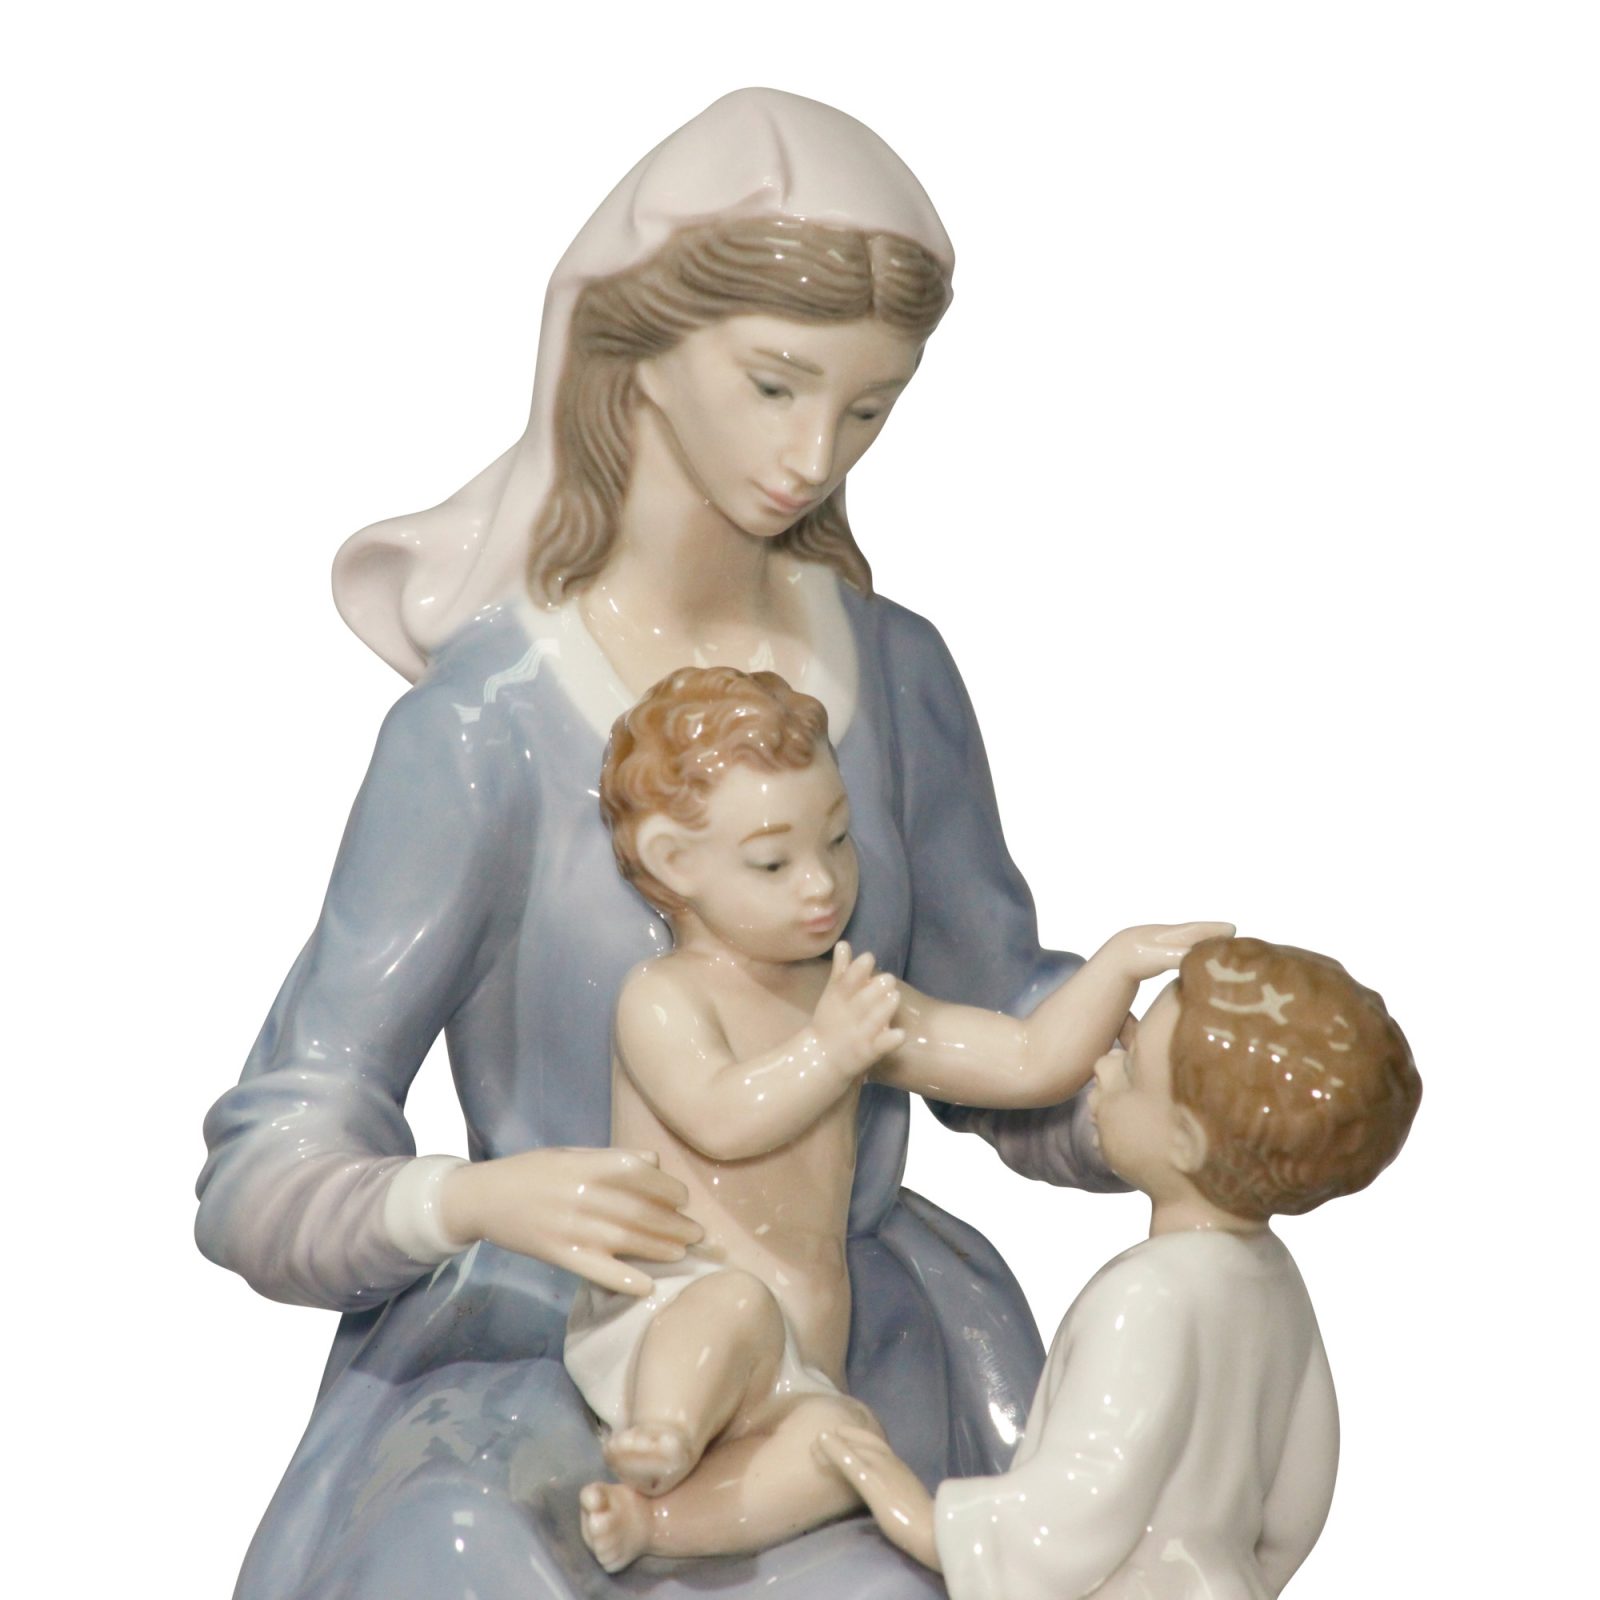 Bless the Child 5996 - Lladro Figurine